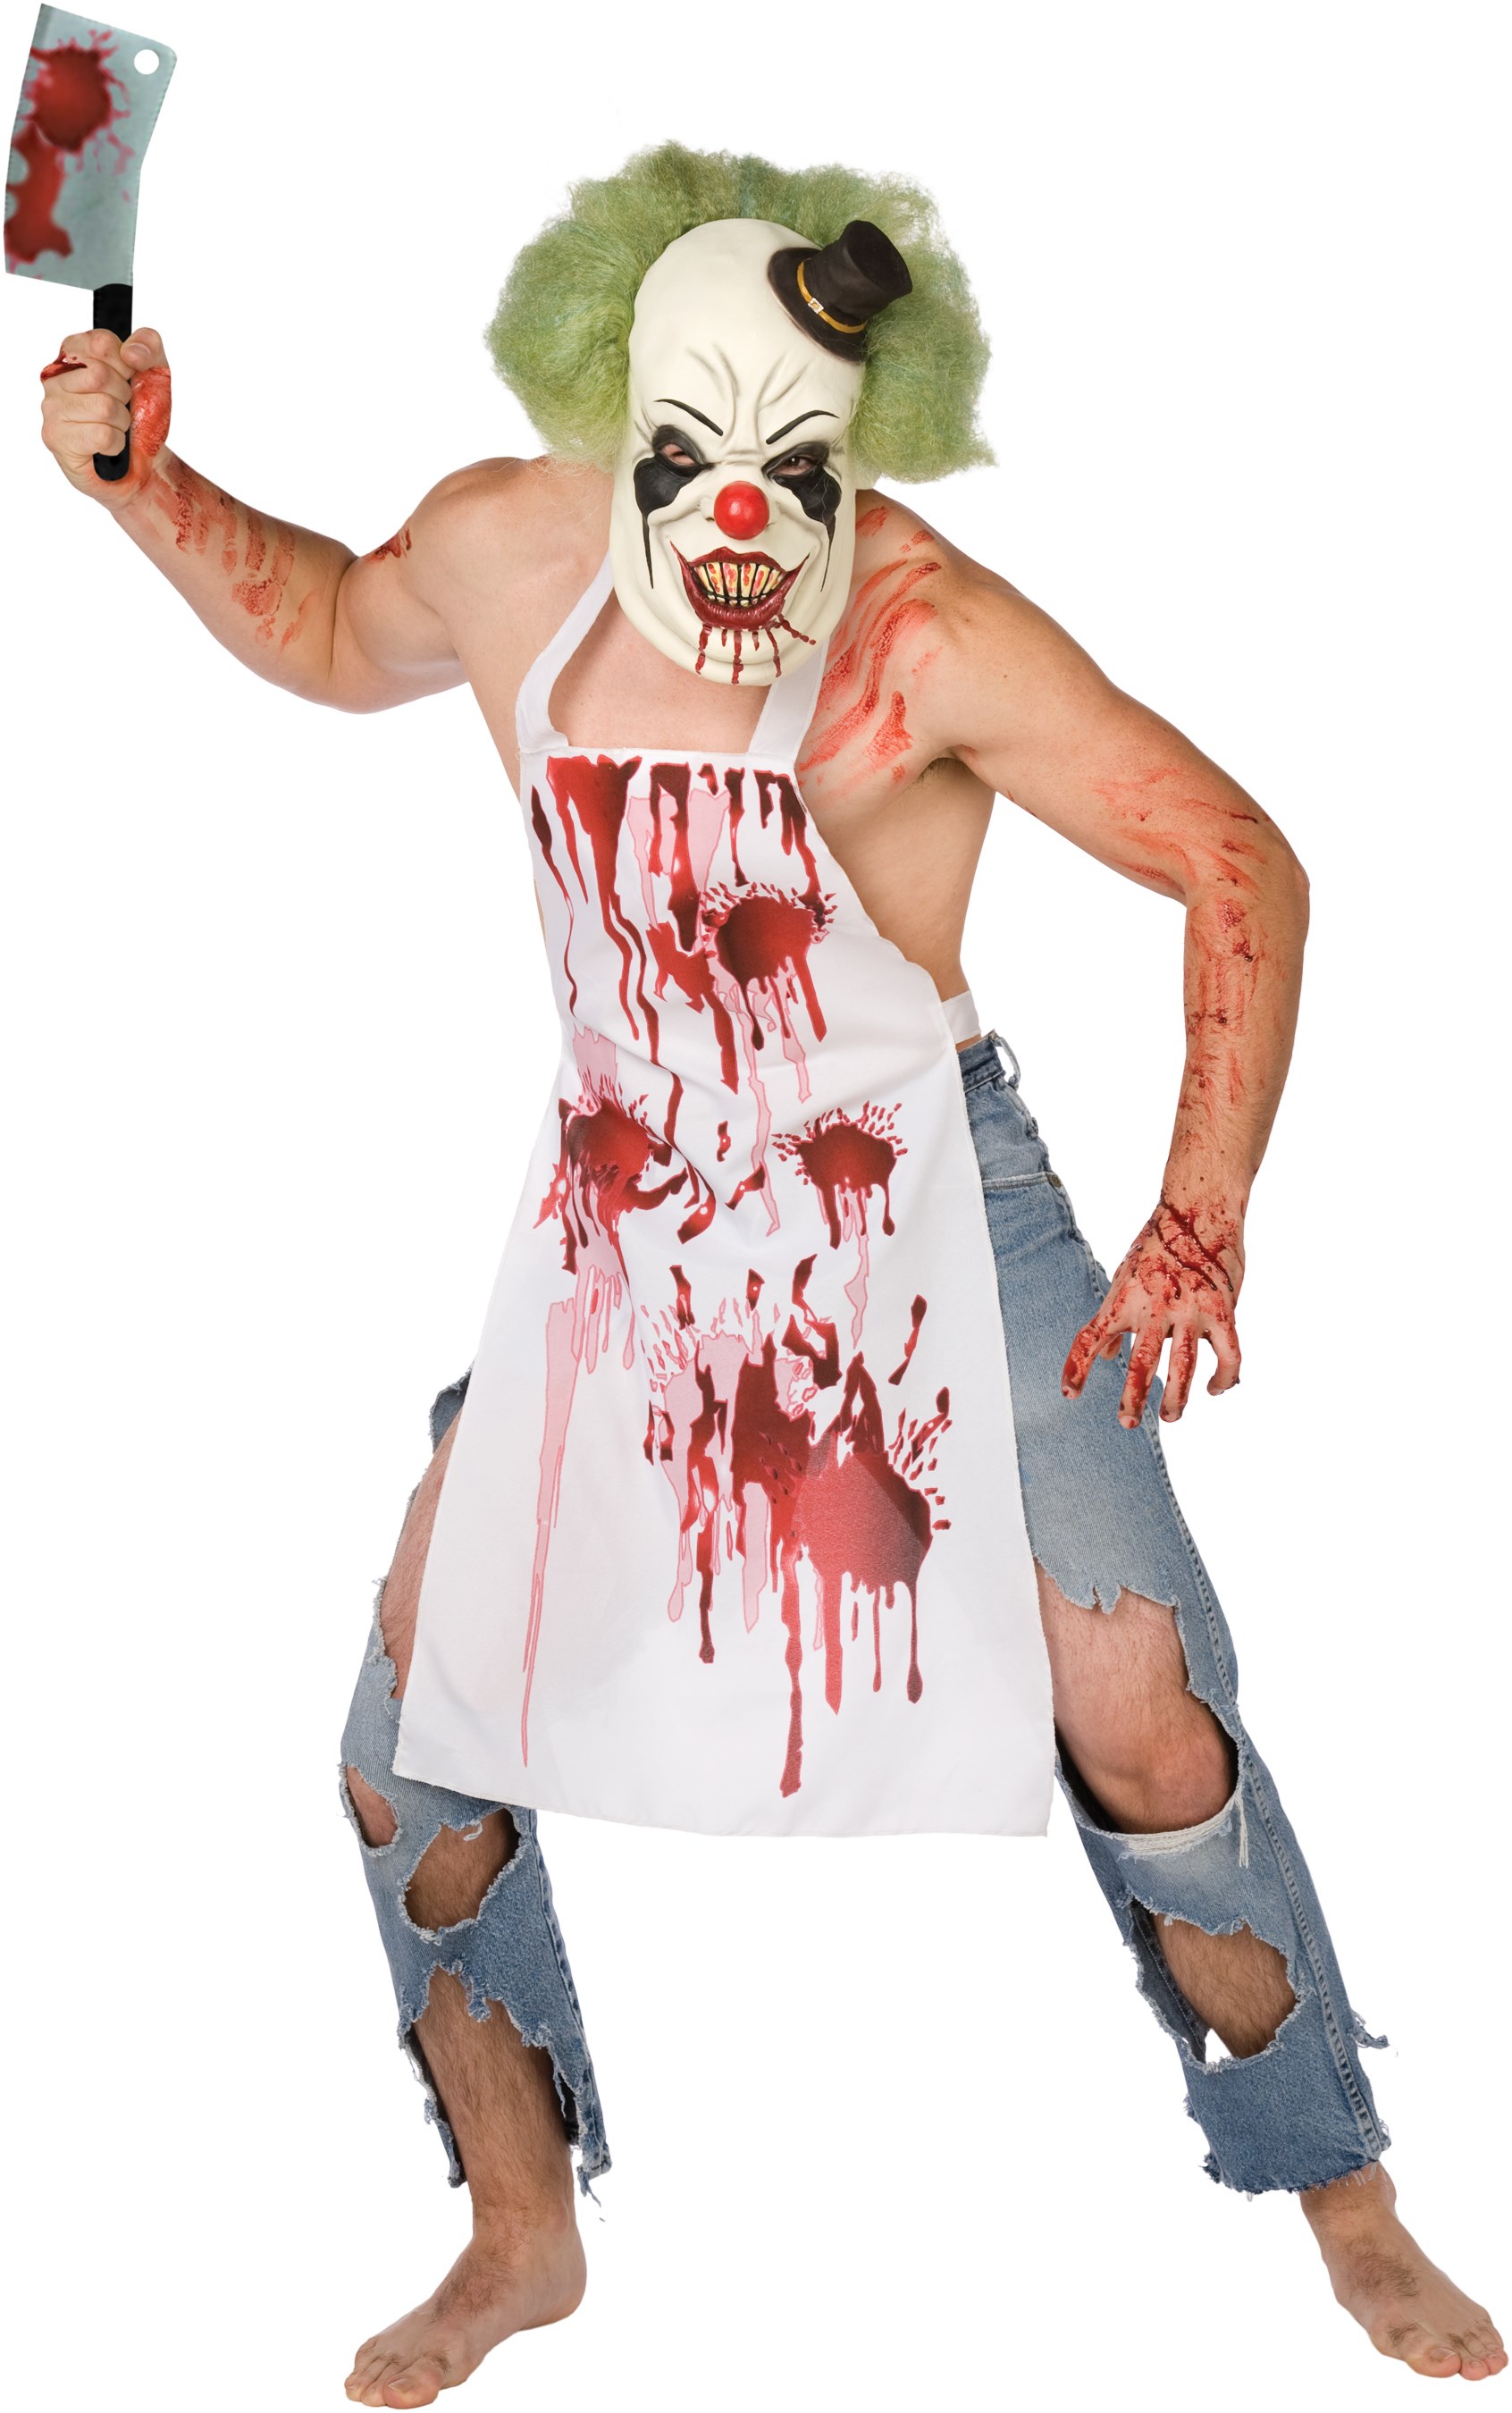 Killer Clown Adult Costume